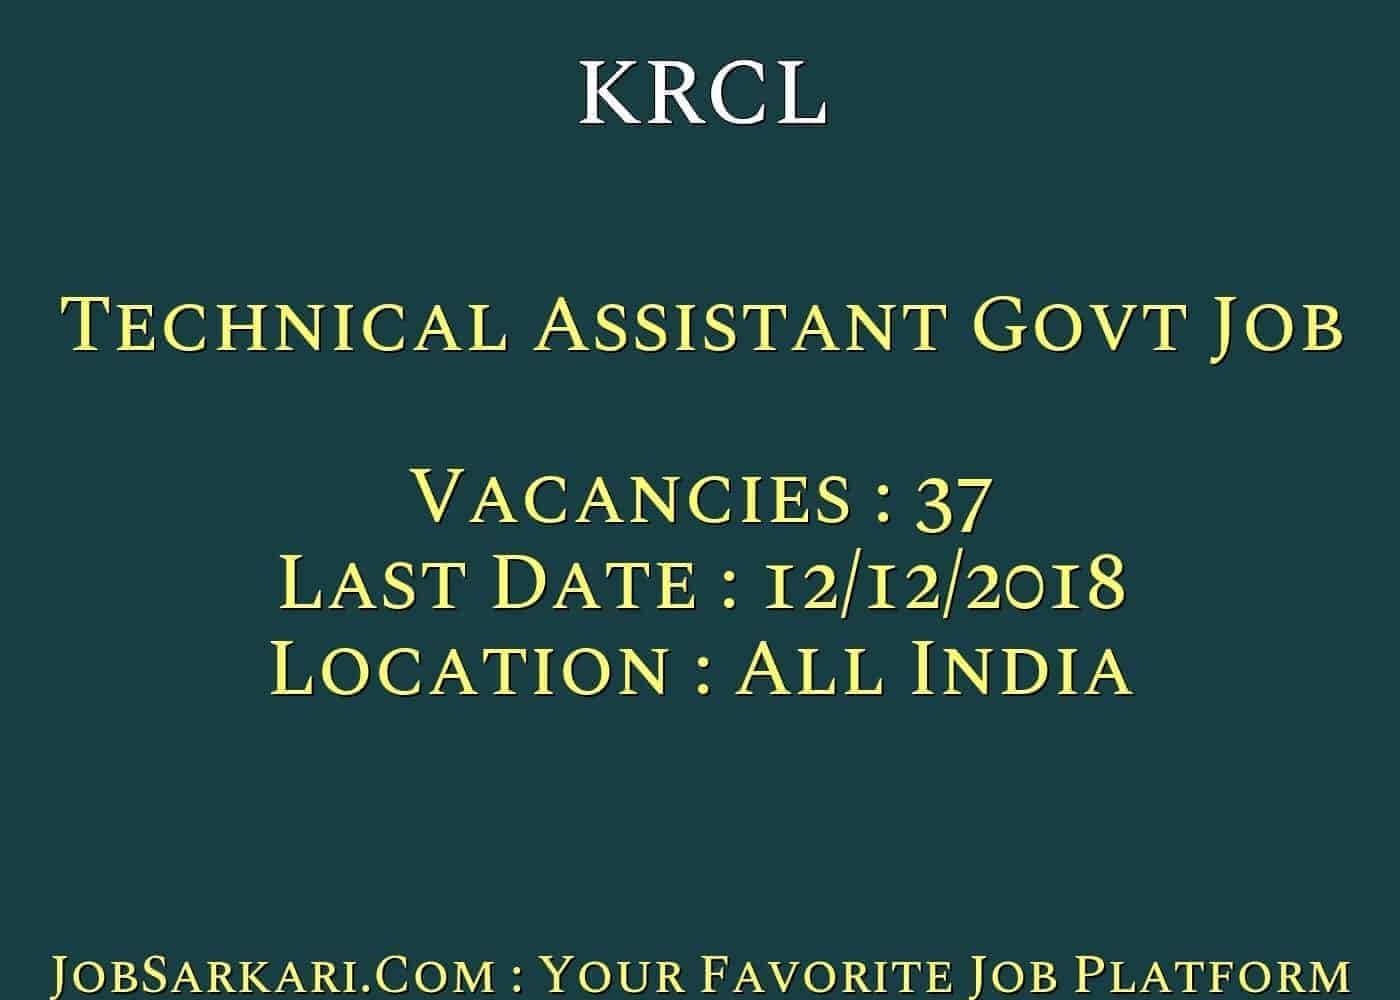 KRCL Recruitment 2018 for Technical Assistant Govt Job